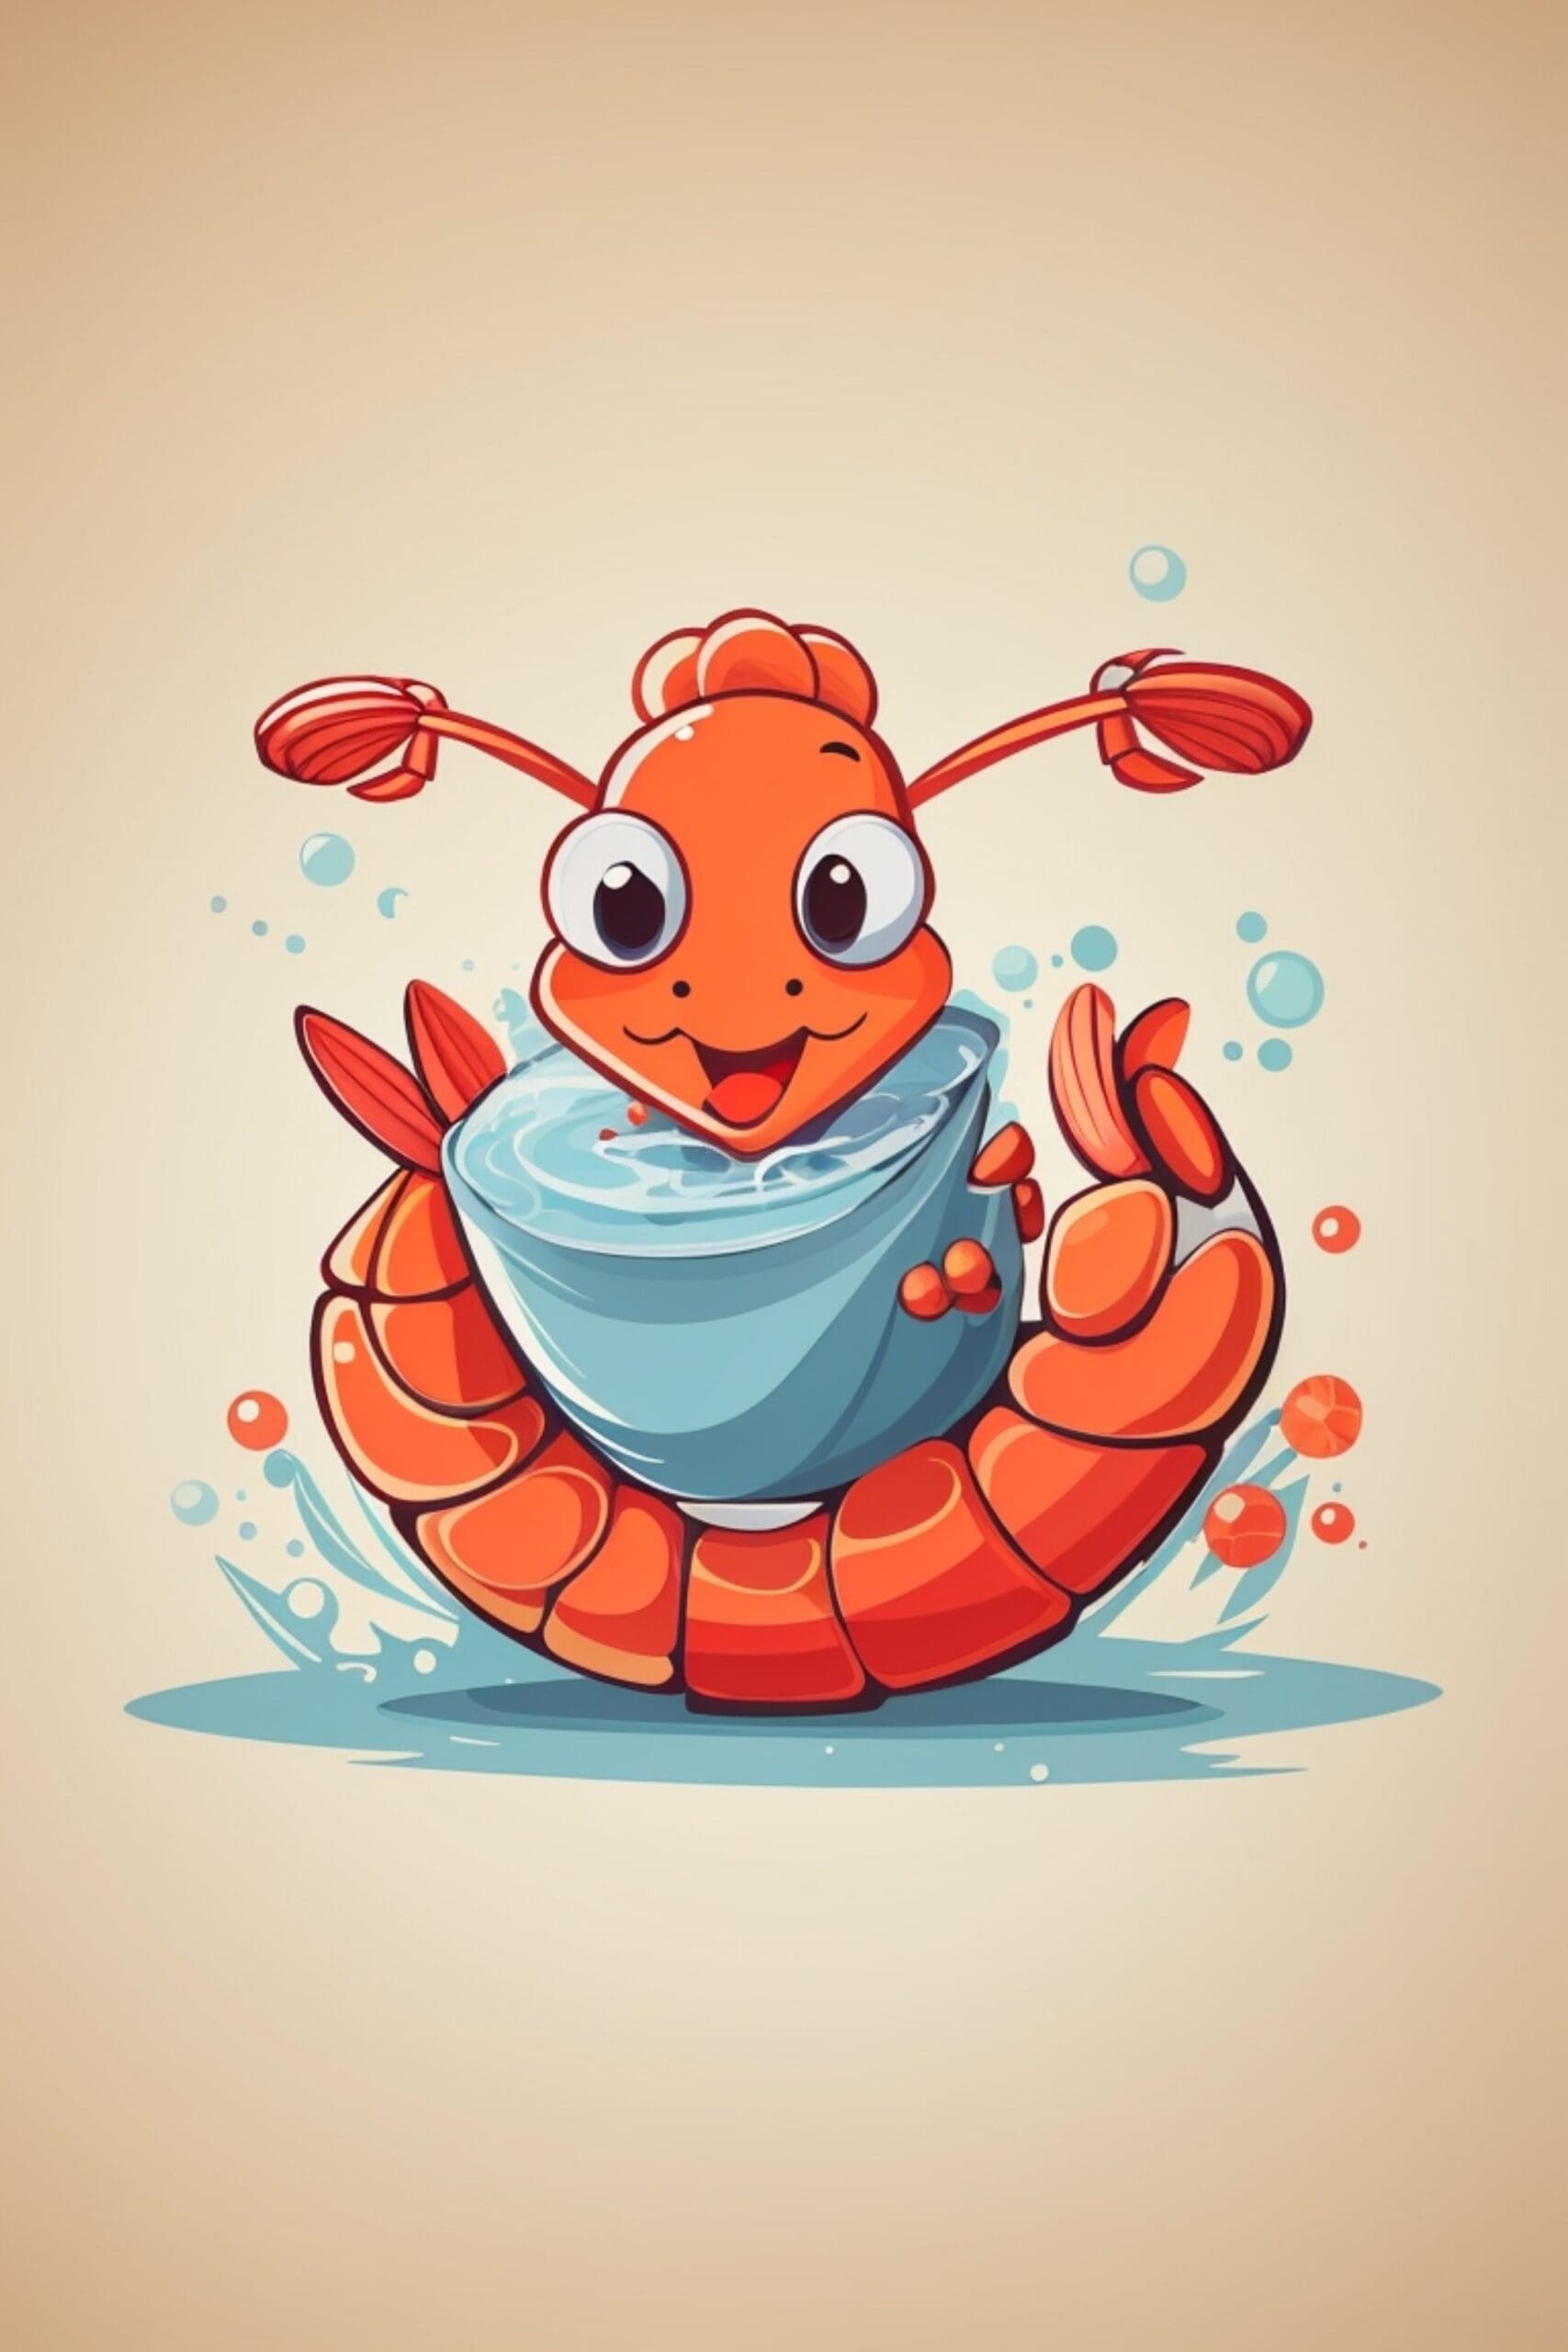 Cartoon graphic of a shrimp dancing the “crustacean shuffle.”